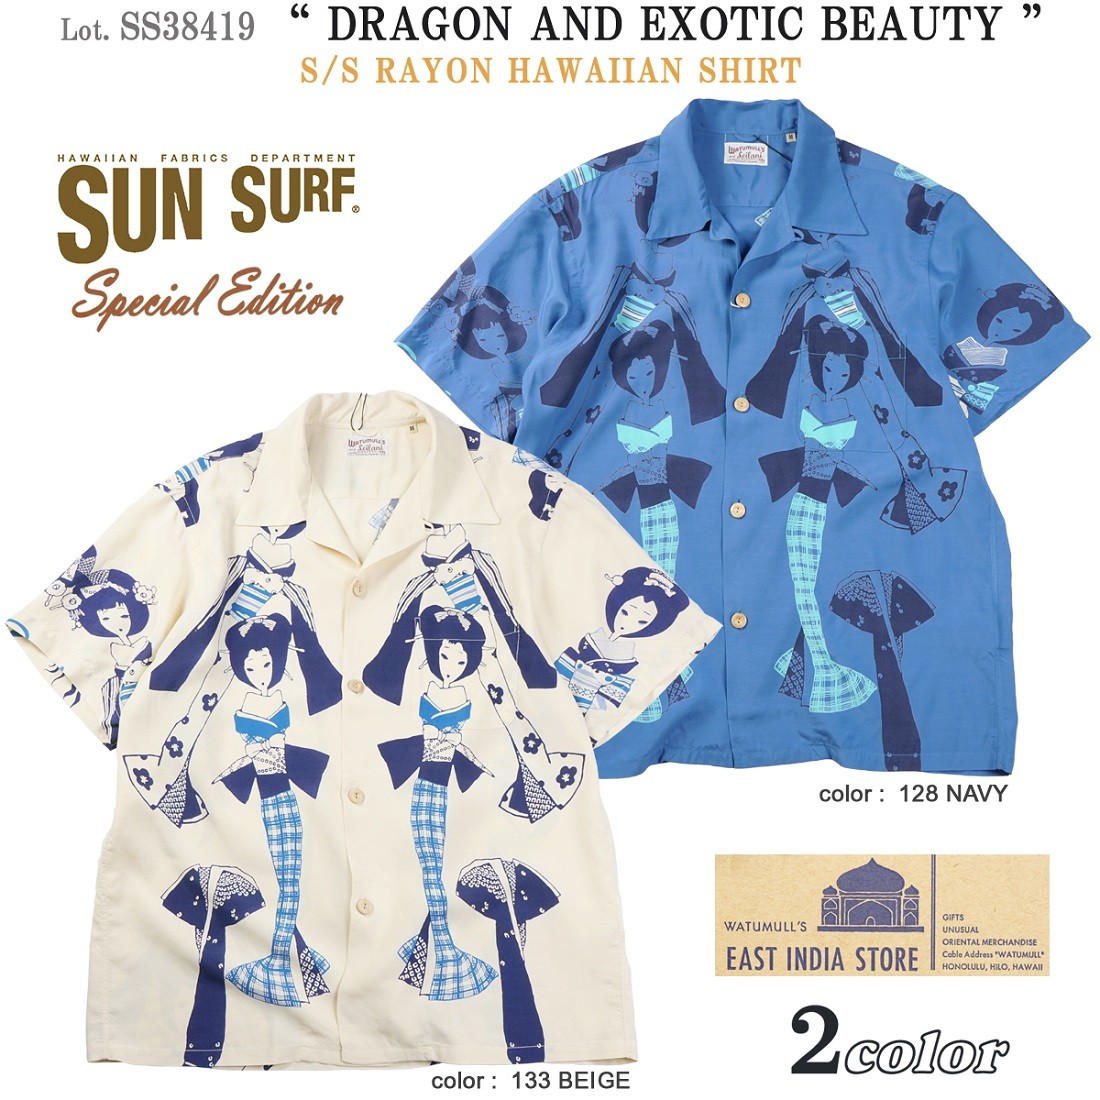 SS38419 サンサーフ スペシャルエディション “DRAGON AND EXOTIC BEAUTY” アロハシャツ (SUN SURF)  SS38419